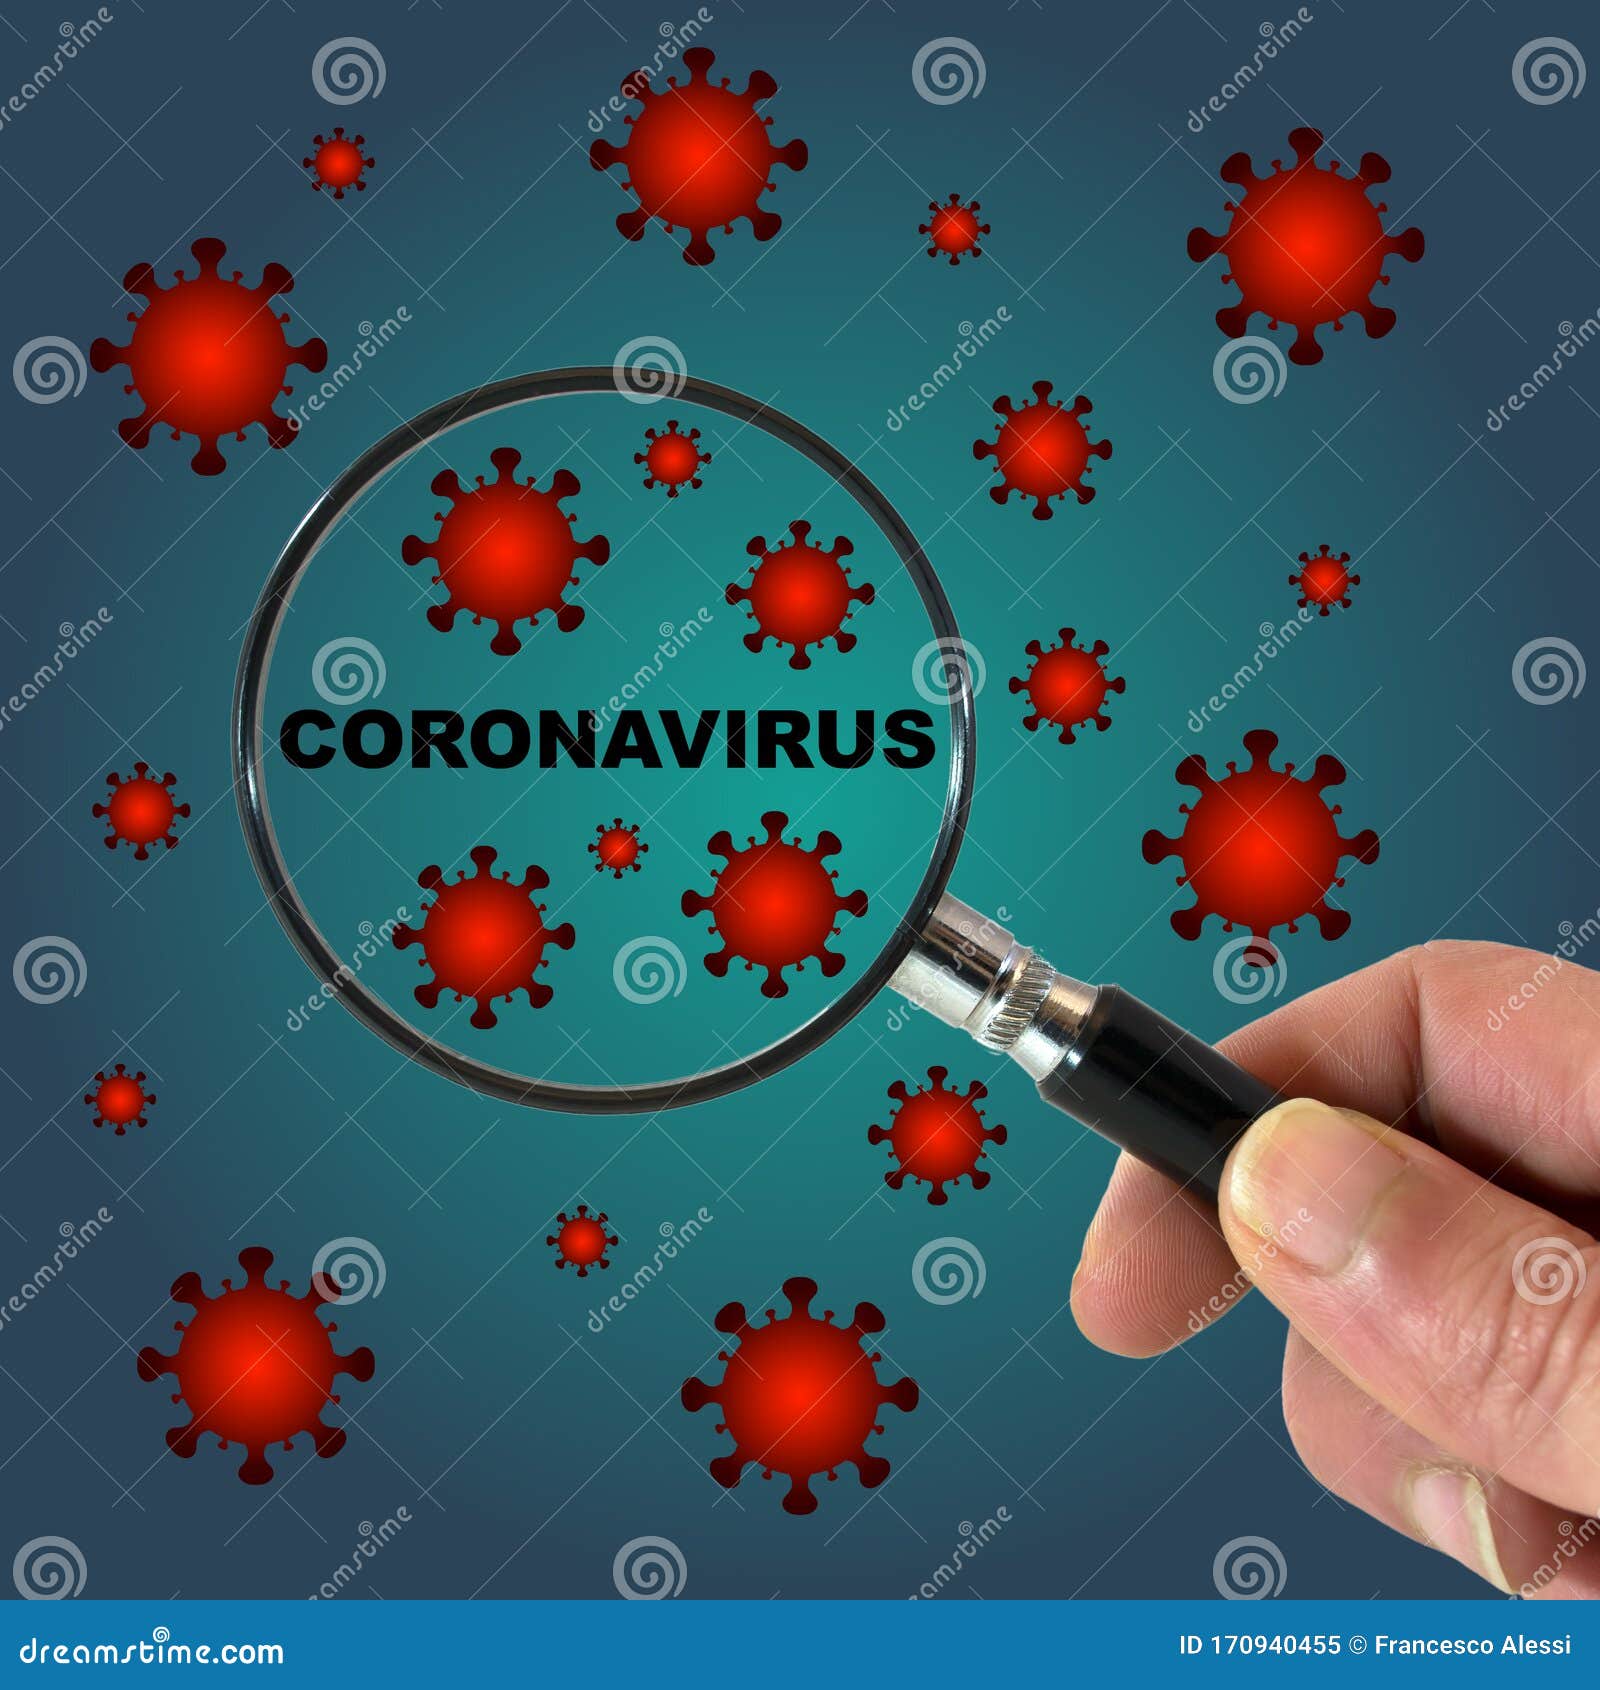 hand with magnifying glass over coronavirus word